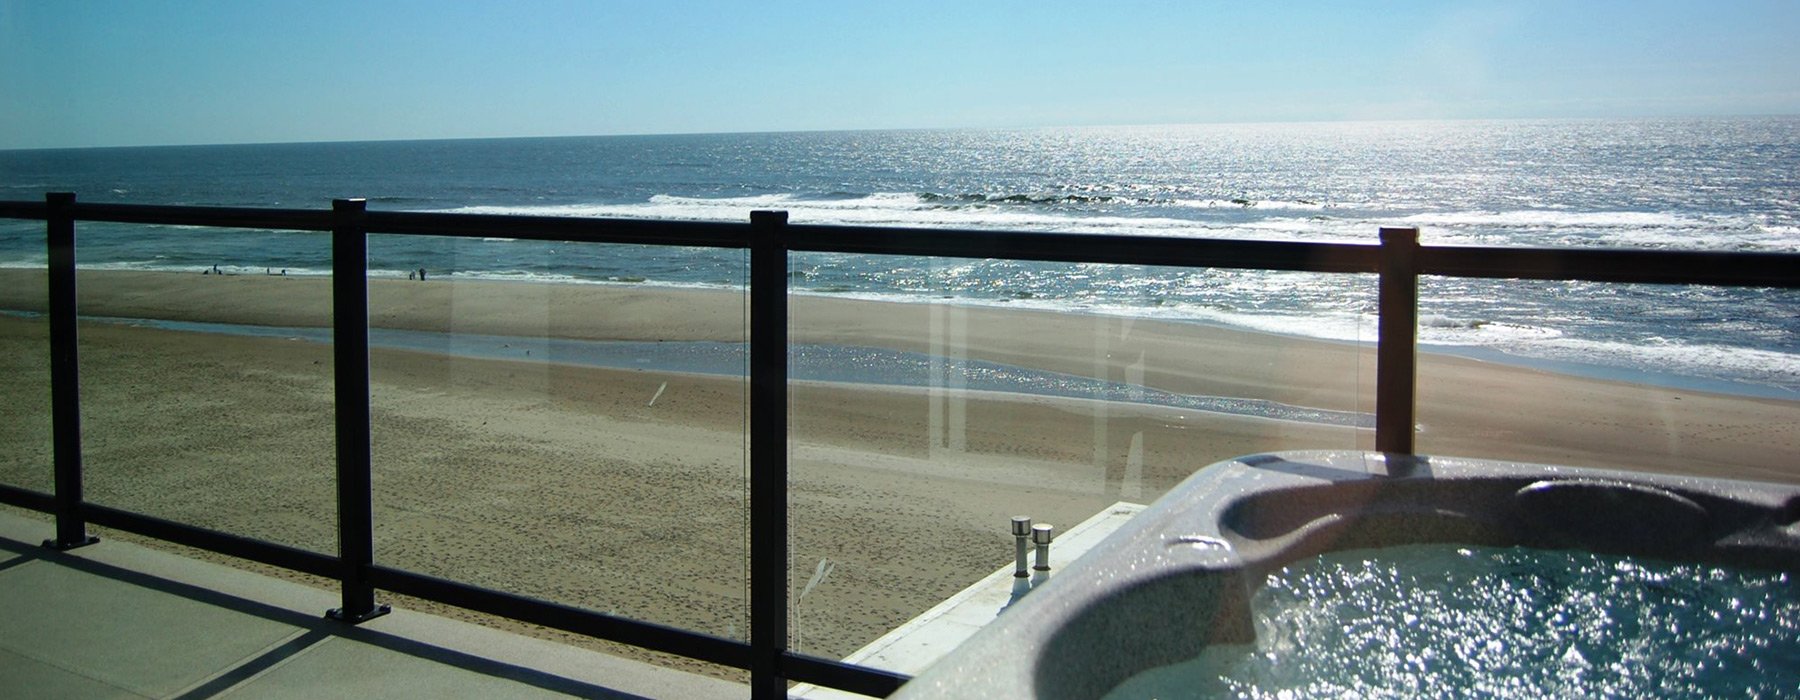 hot tub on a balcony overlooking ocean